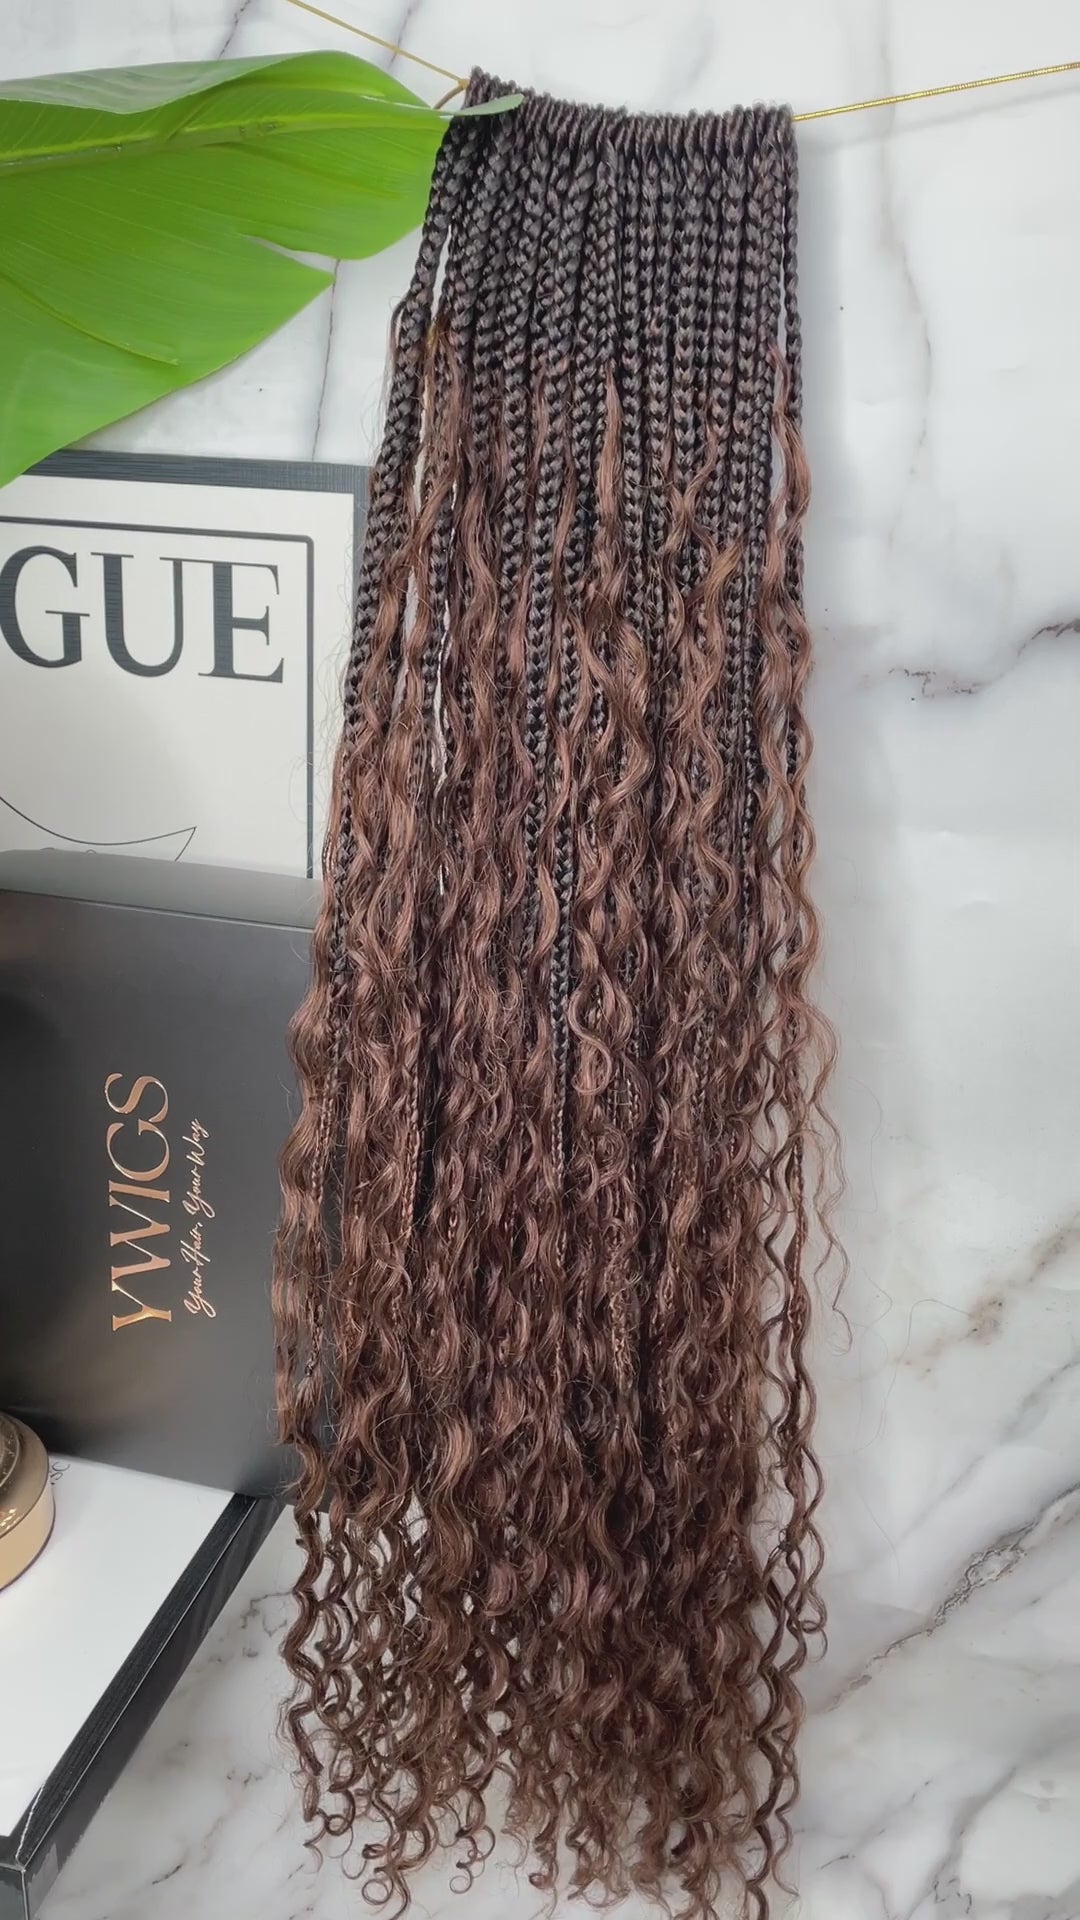 Crochet Boho Box Braids with Human Hair Curls in Brown